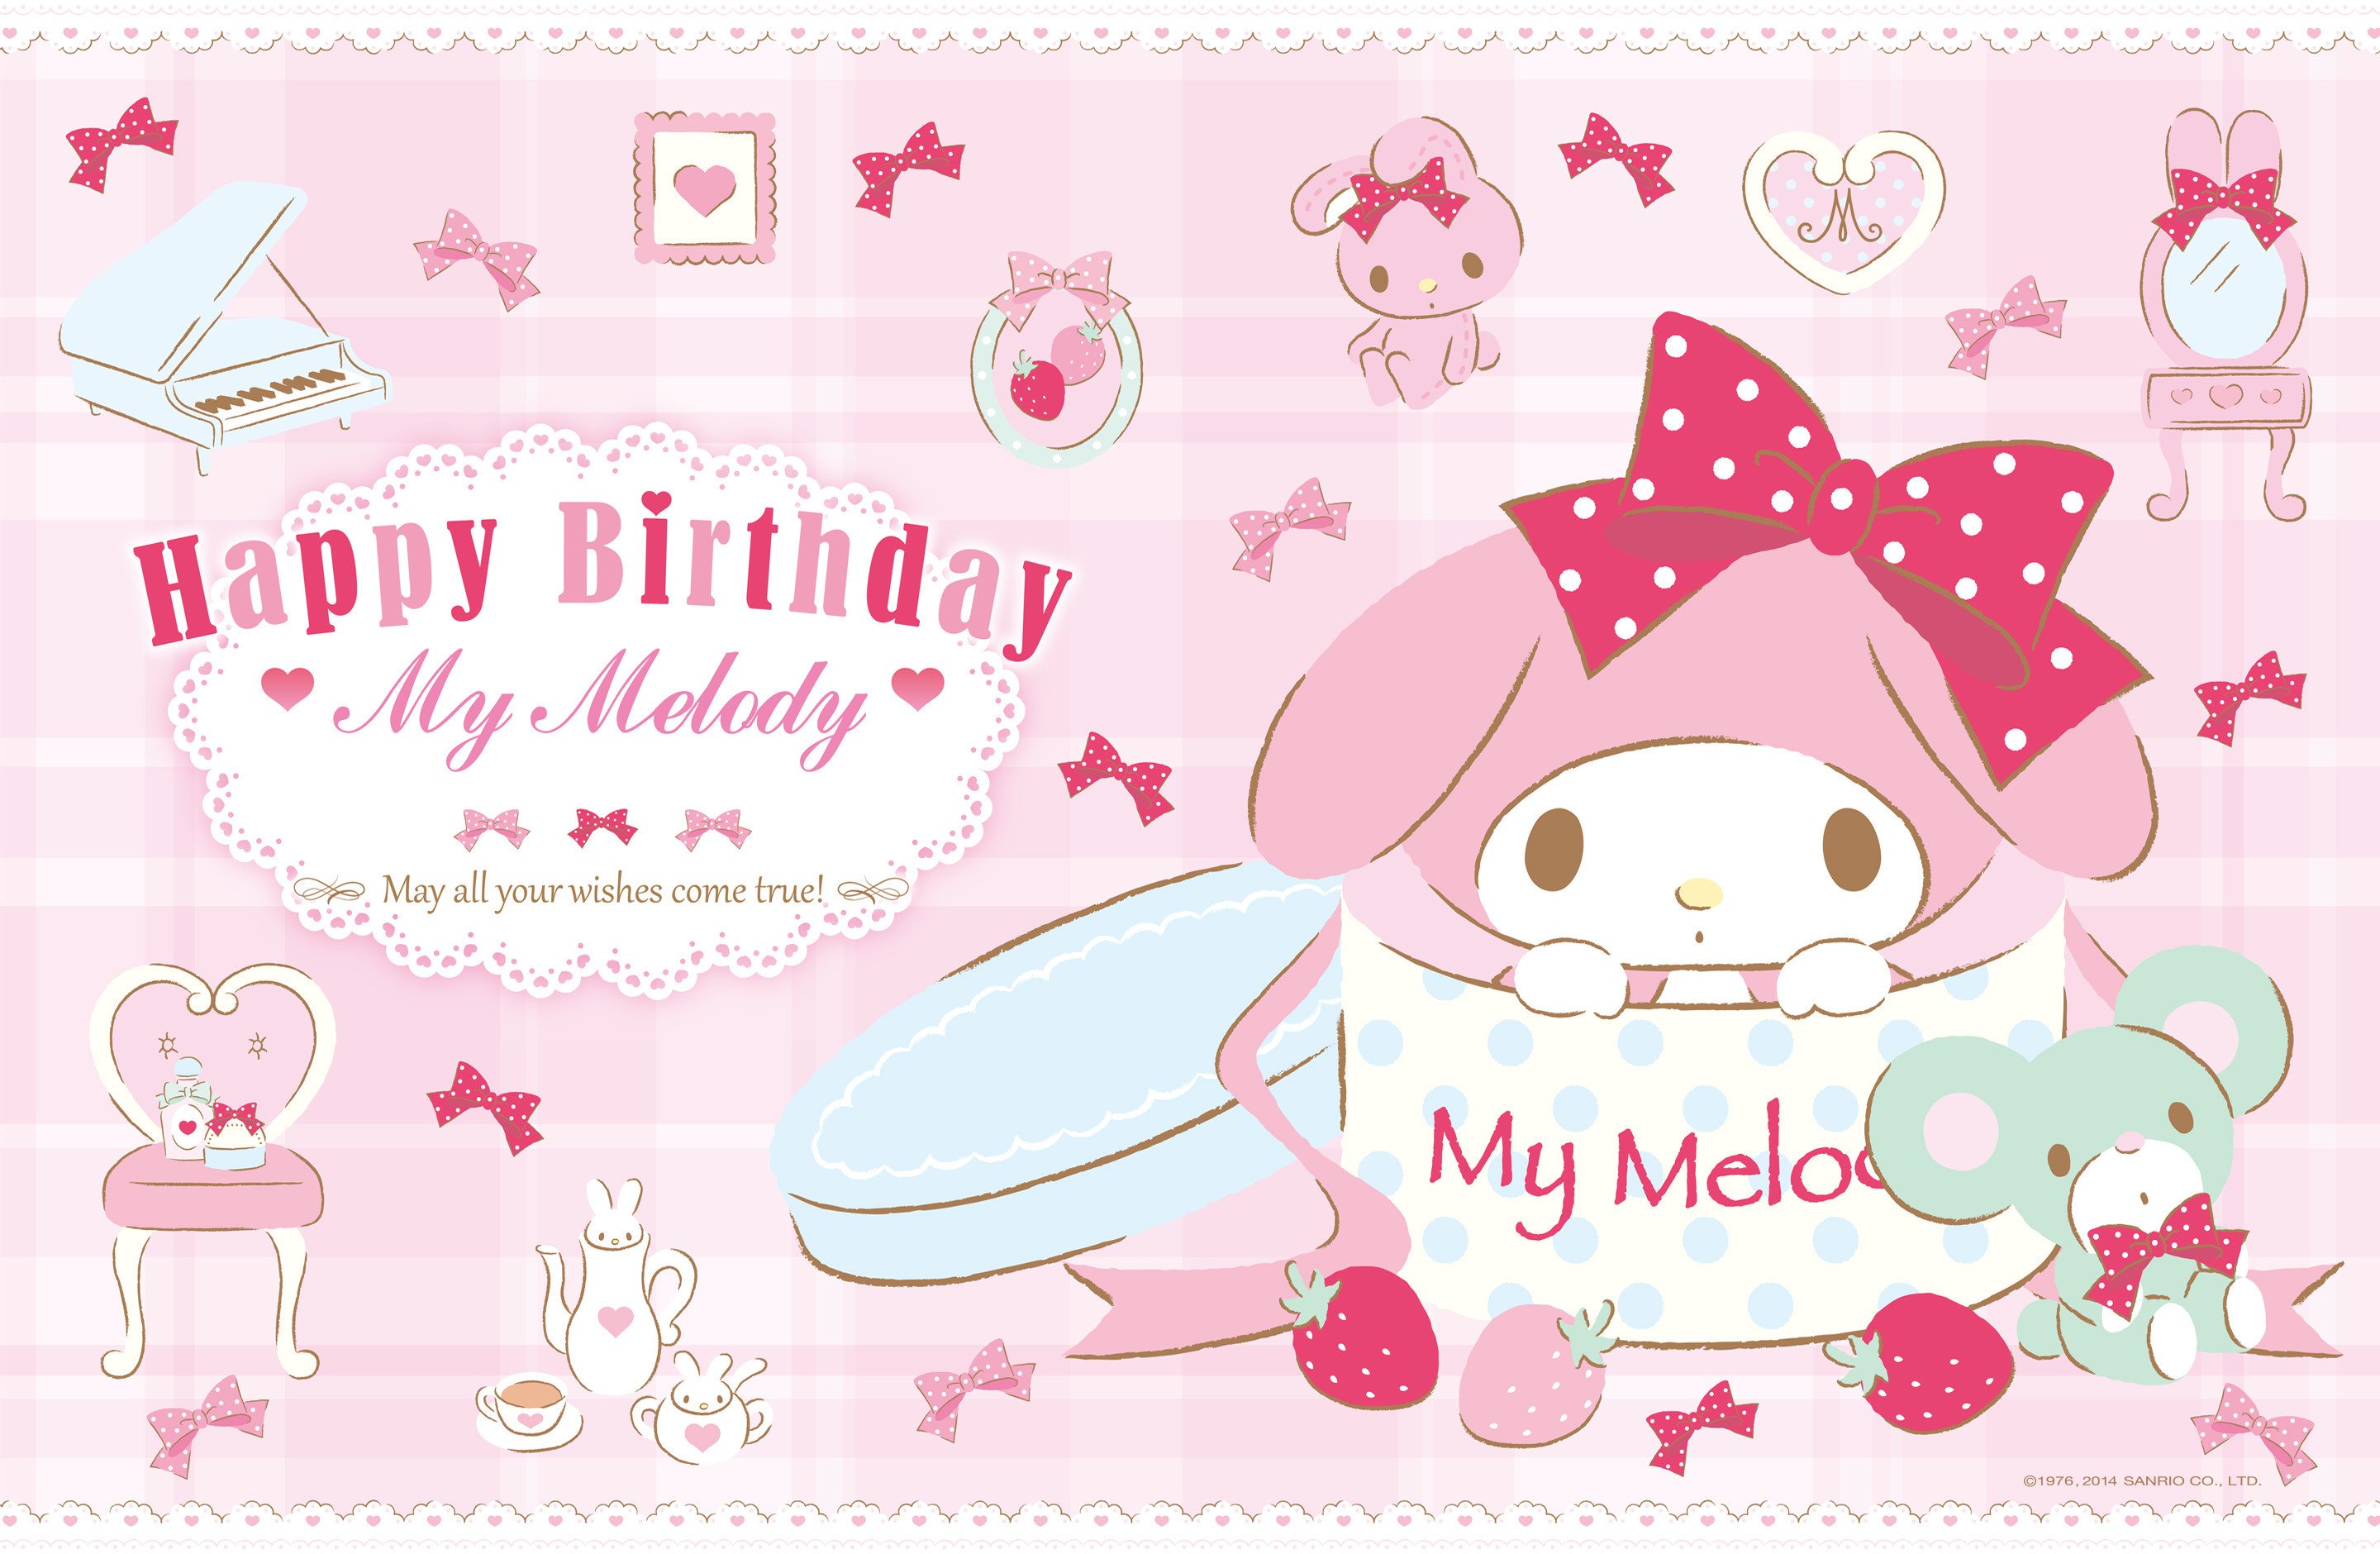 Sanrio: My Melody:)